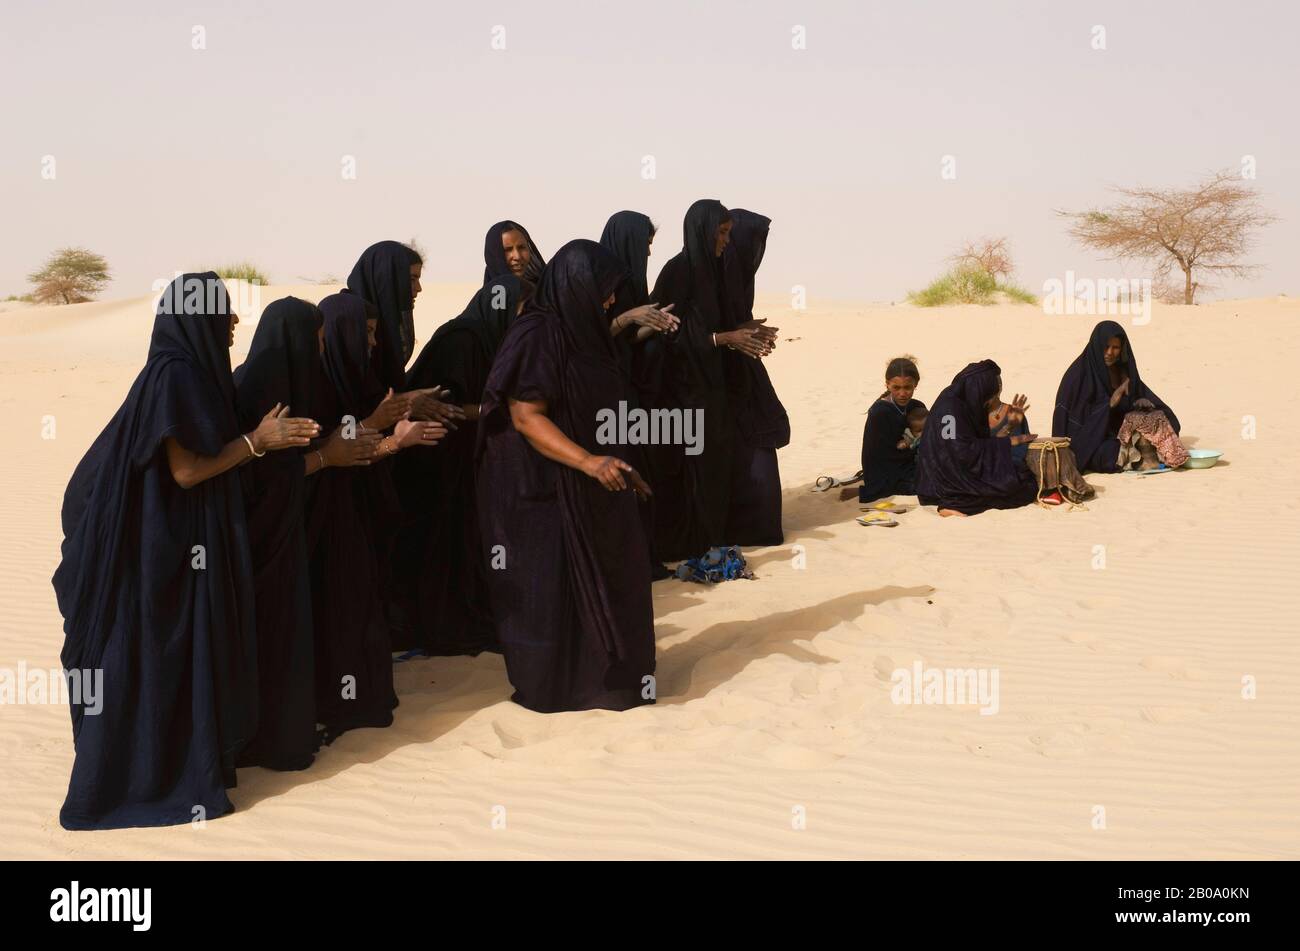 MALI, NEAR TIMBUKTU, SAHARA DESERT, TUAREG WOMEN PERFORMING TRADITIONAL DANCE IN DESERT, CLAPPING WITH HANDS Stock Photo